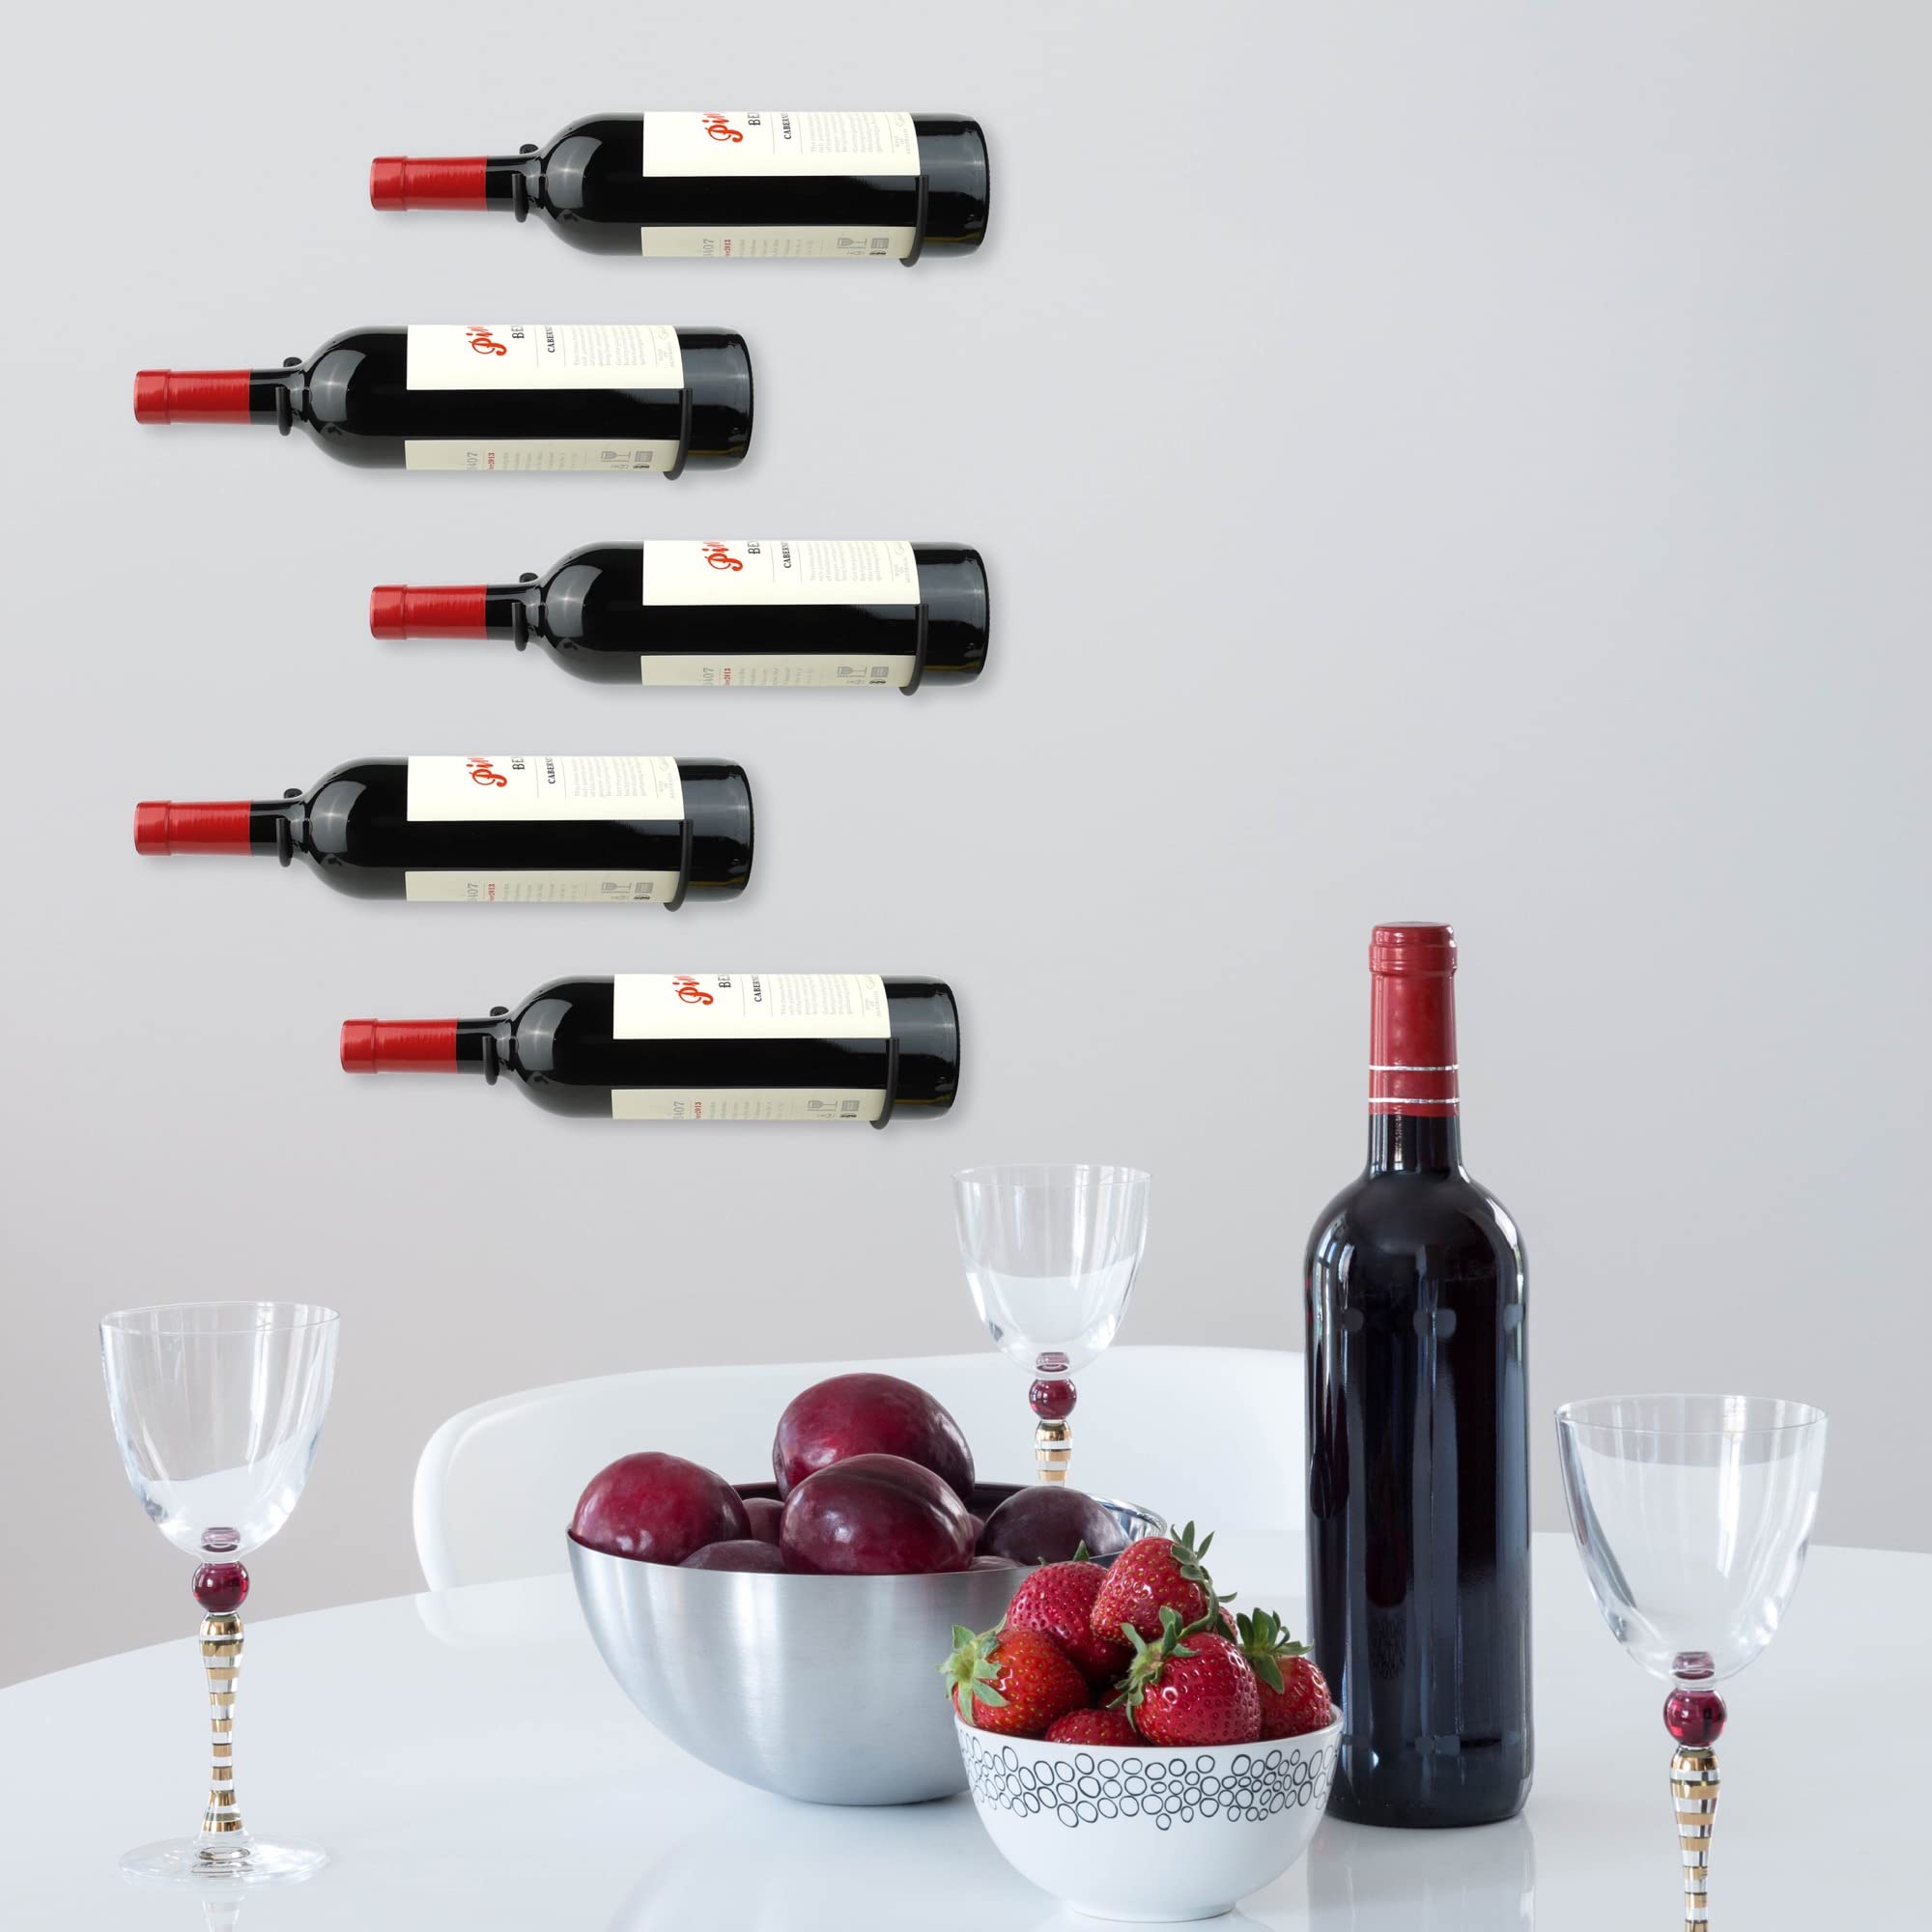 AQAREA Wall-Mounted Wine Hook: Hanging Wine Bottle Wall Holder - Set of 6 Metal Wall Red Wine Rack